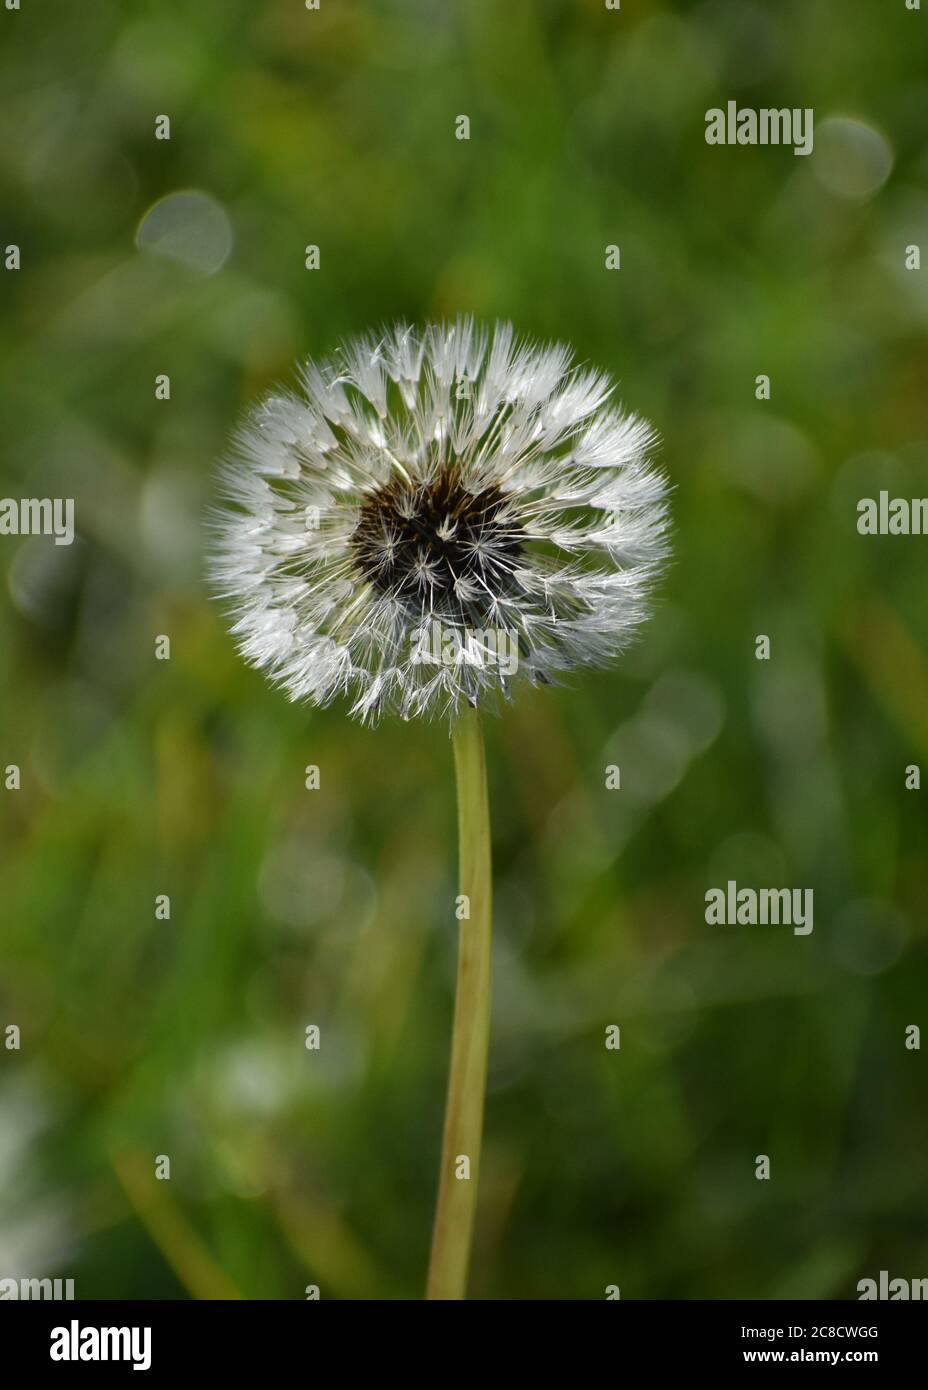 Closeup of a dandelion Stock Photo